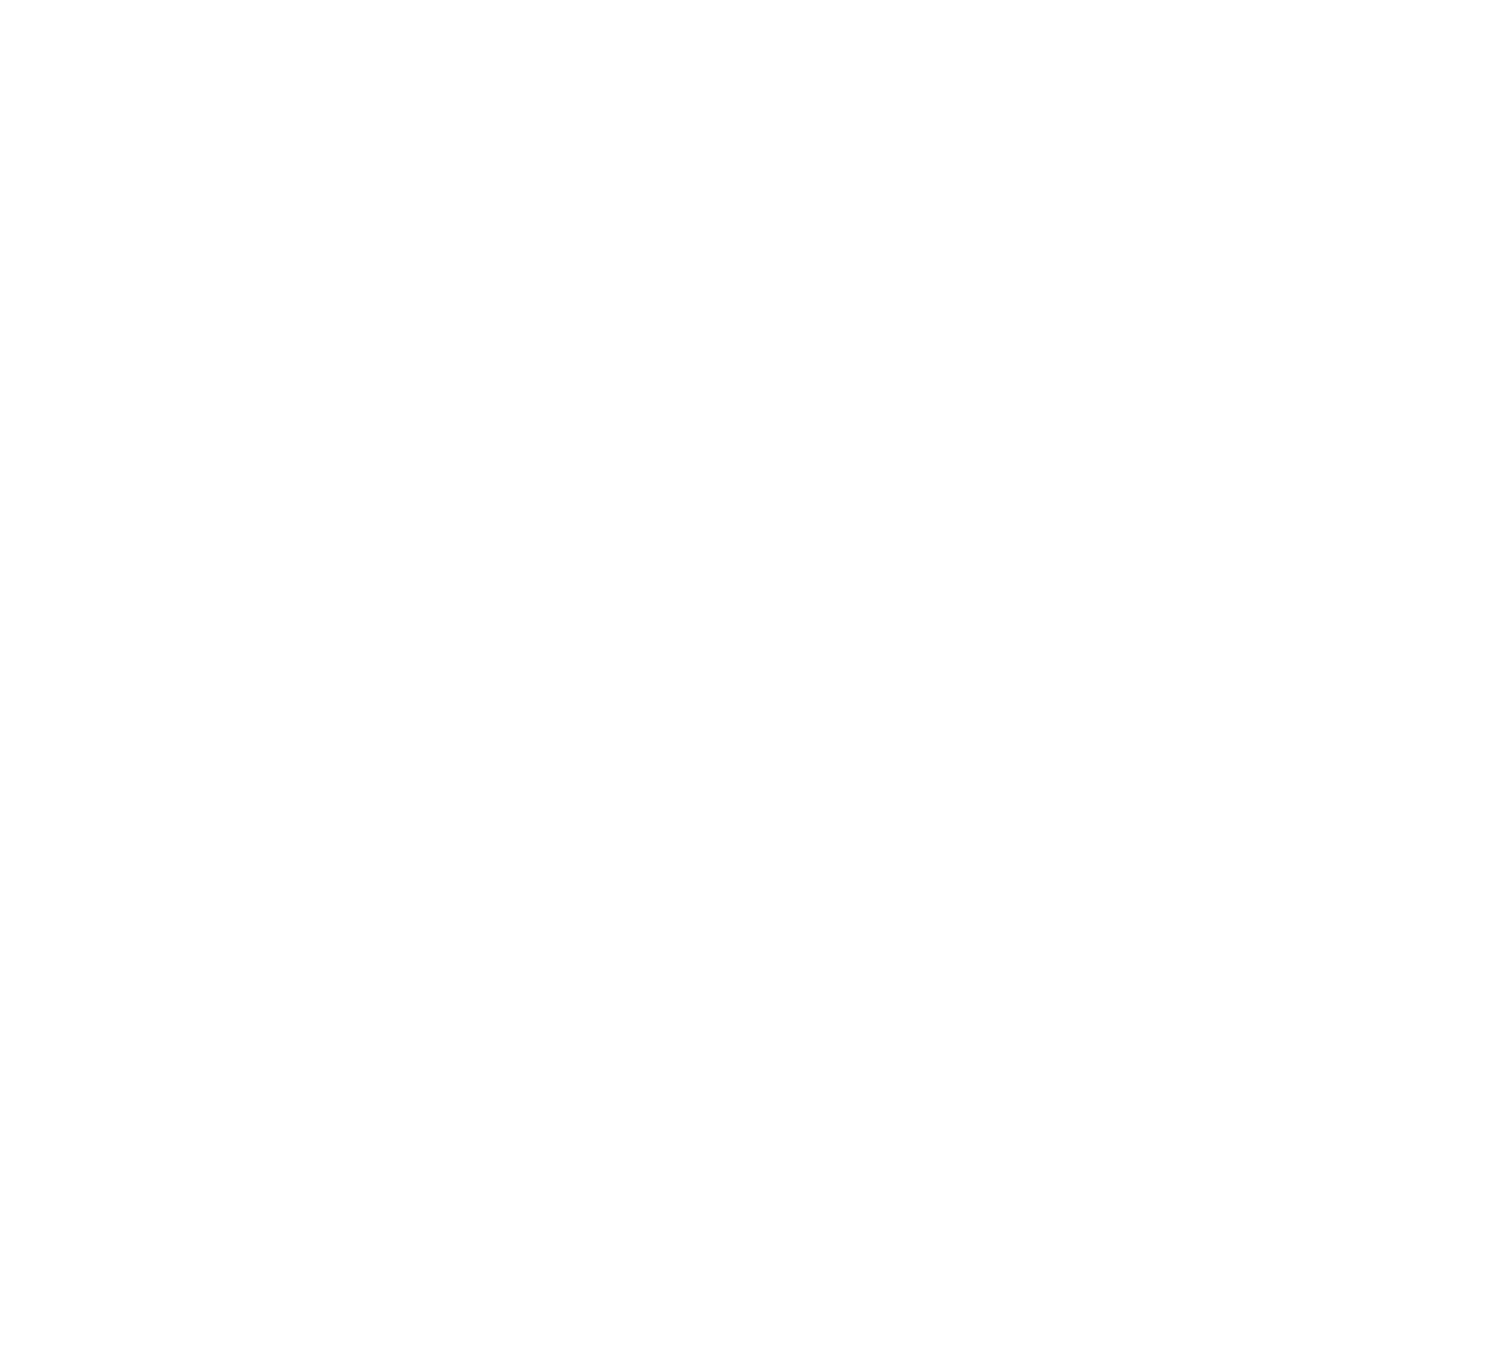 Sipe Laboratory